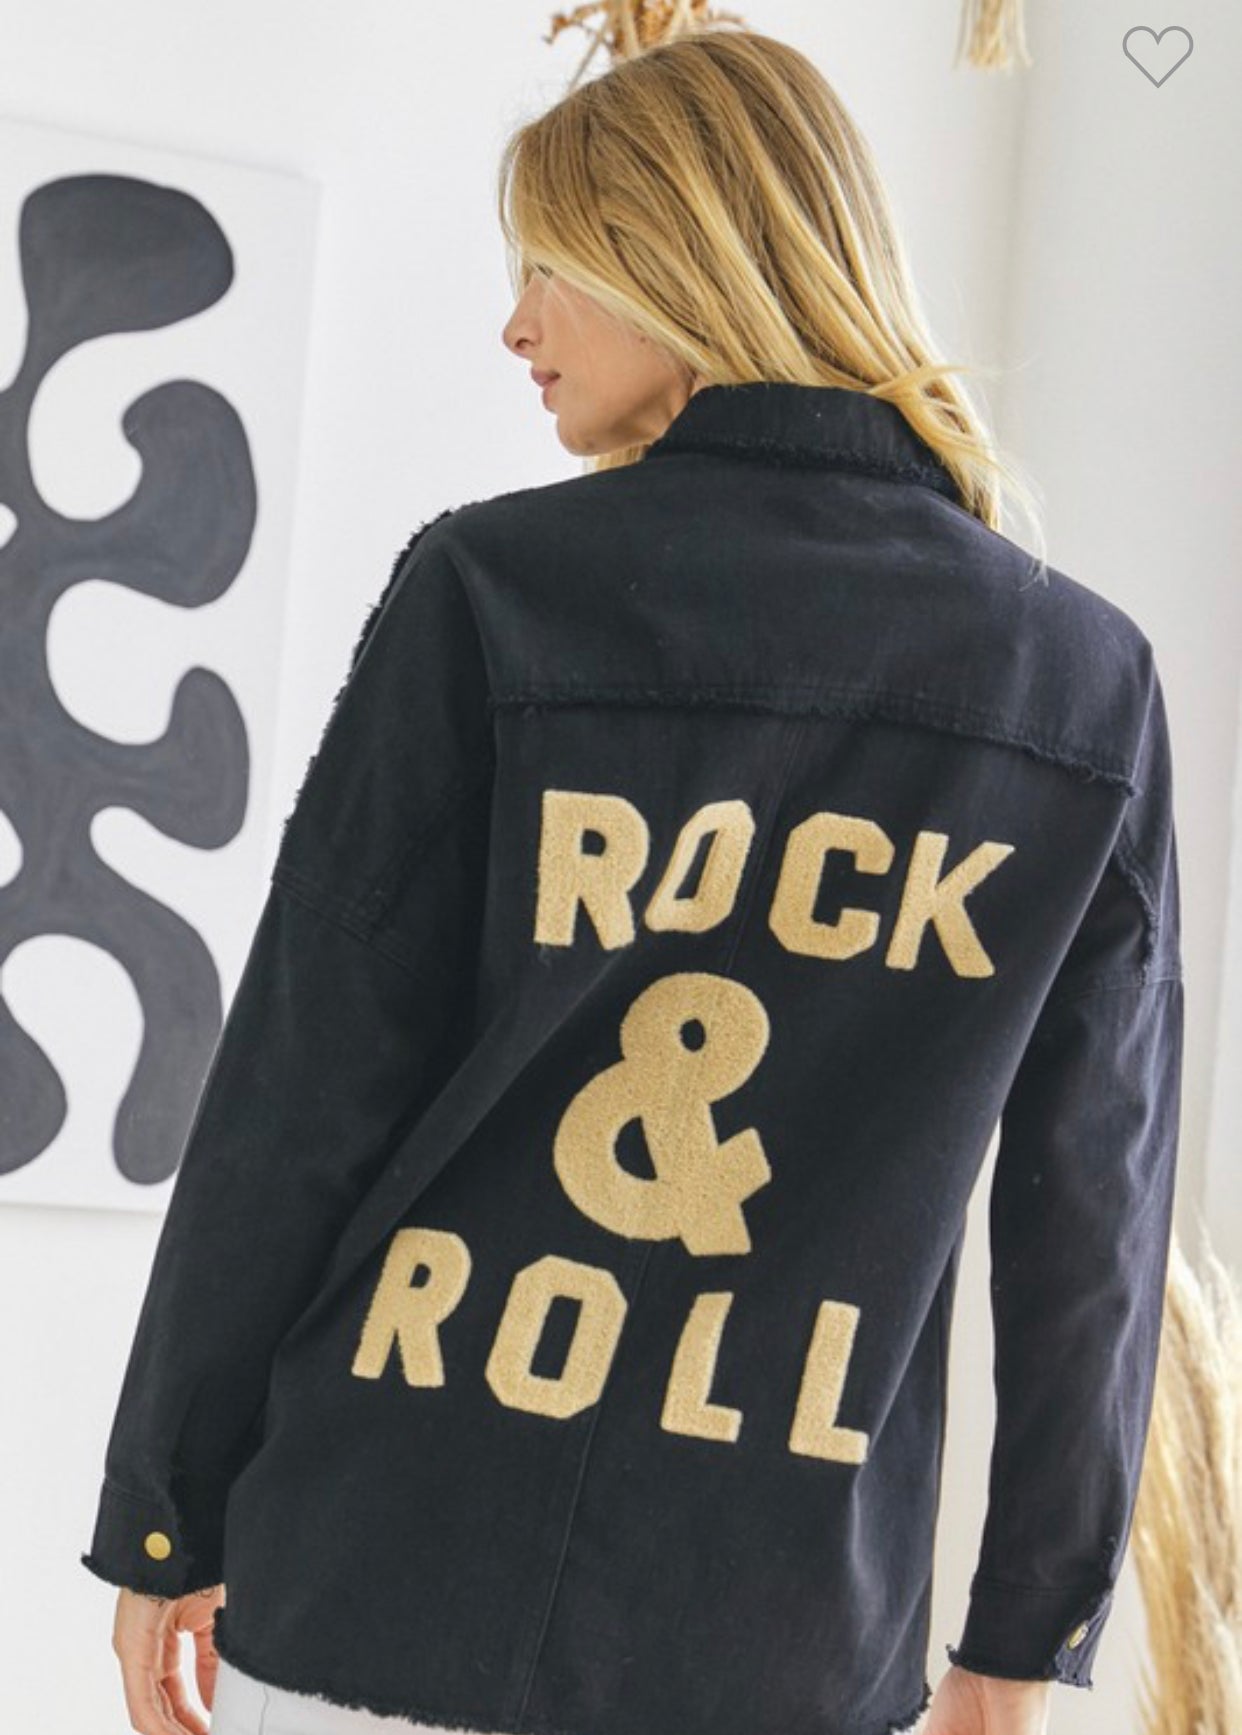 Rock & Roll Button Jacket - Black & Olive